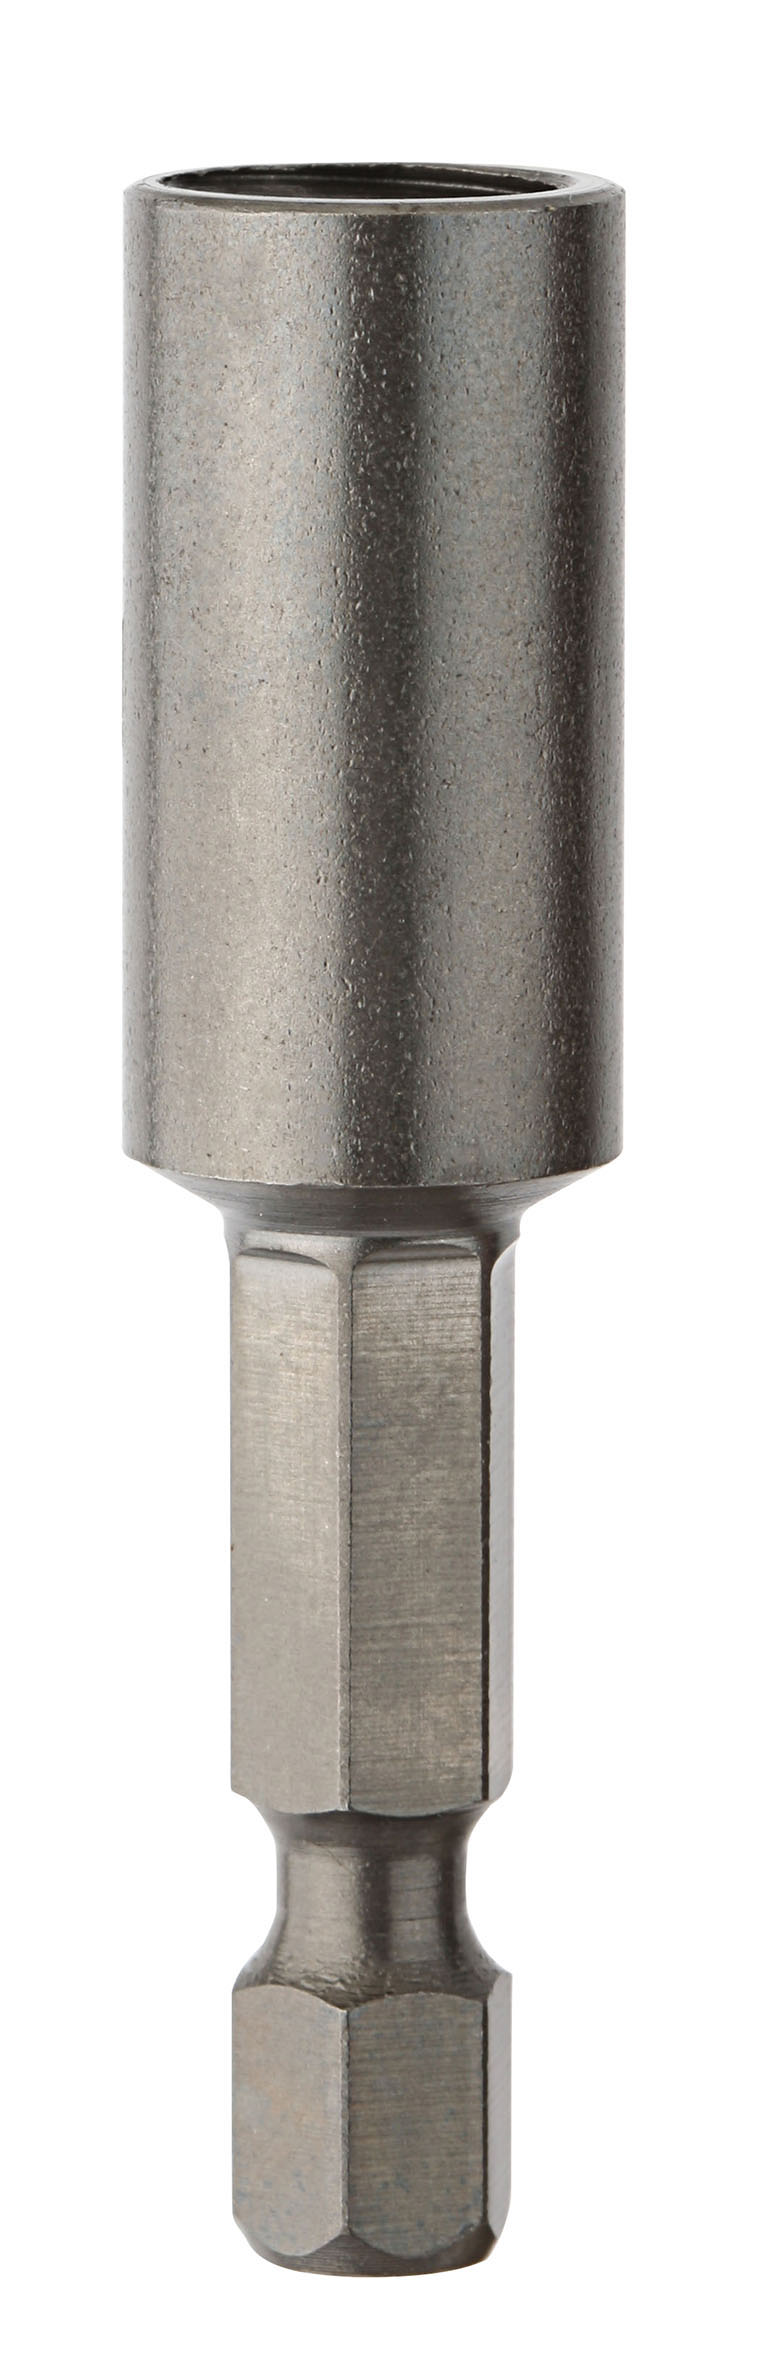 Screwdriving Pro magnetic socket Magnetic socket length 65 mm for hexagonal metric screws. - U603.jpg